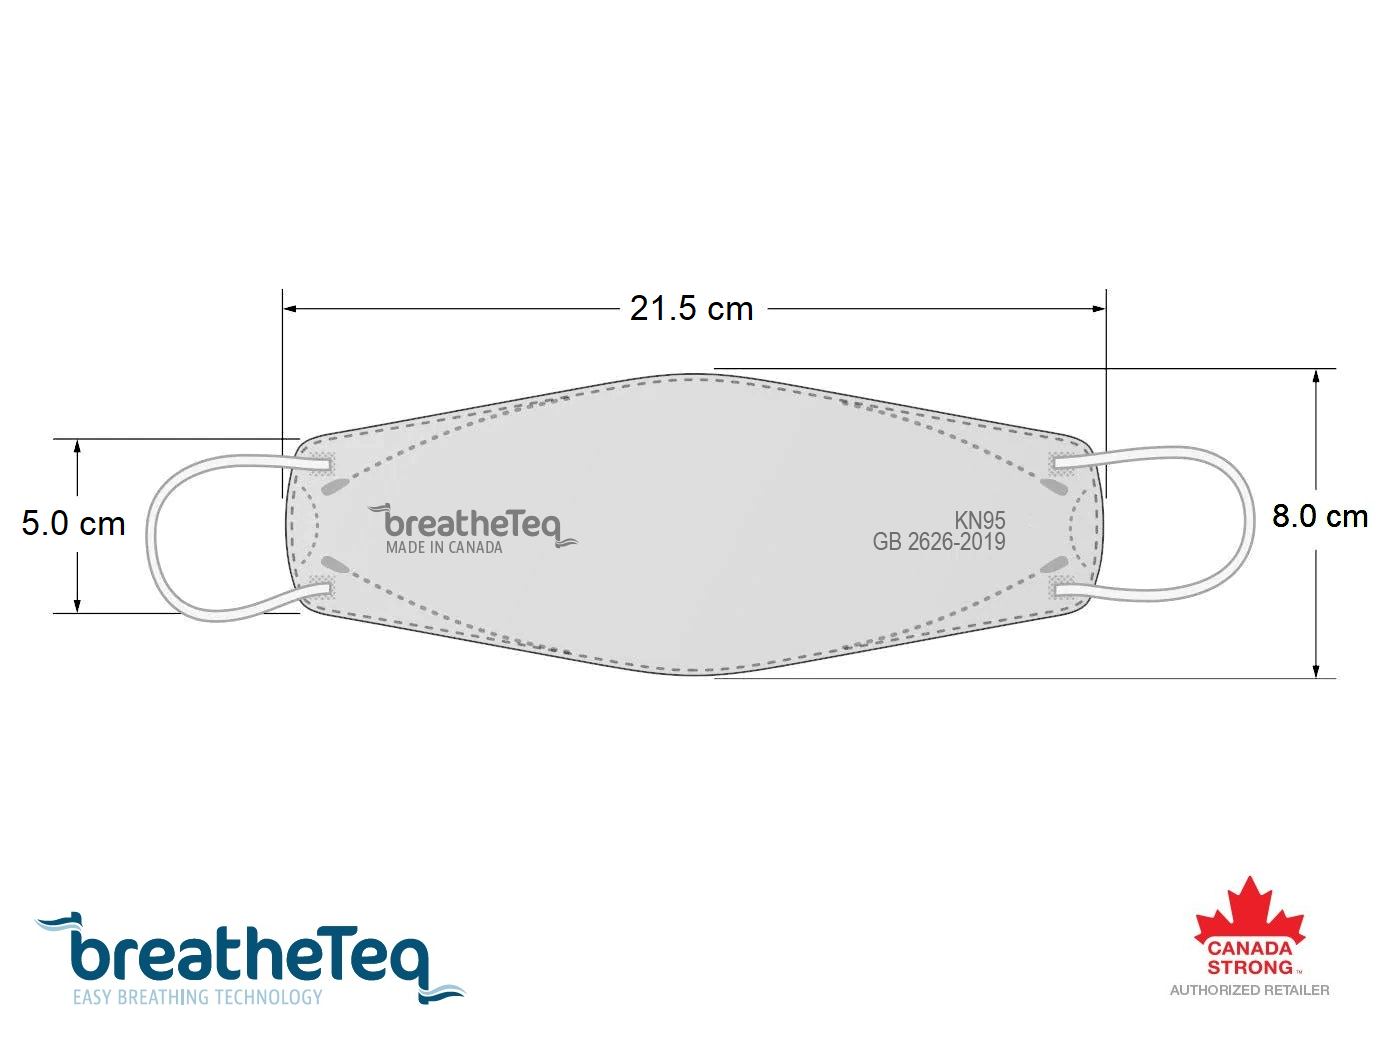 Dimensions of BreatheTeq KN95 large size flat fold respirator mask